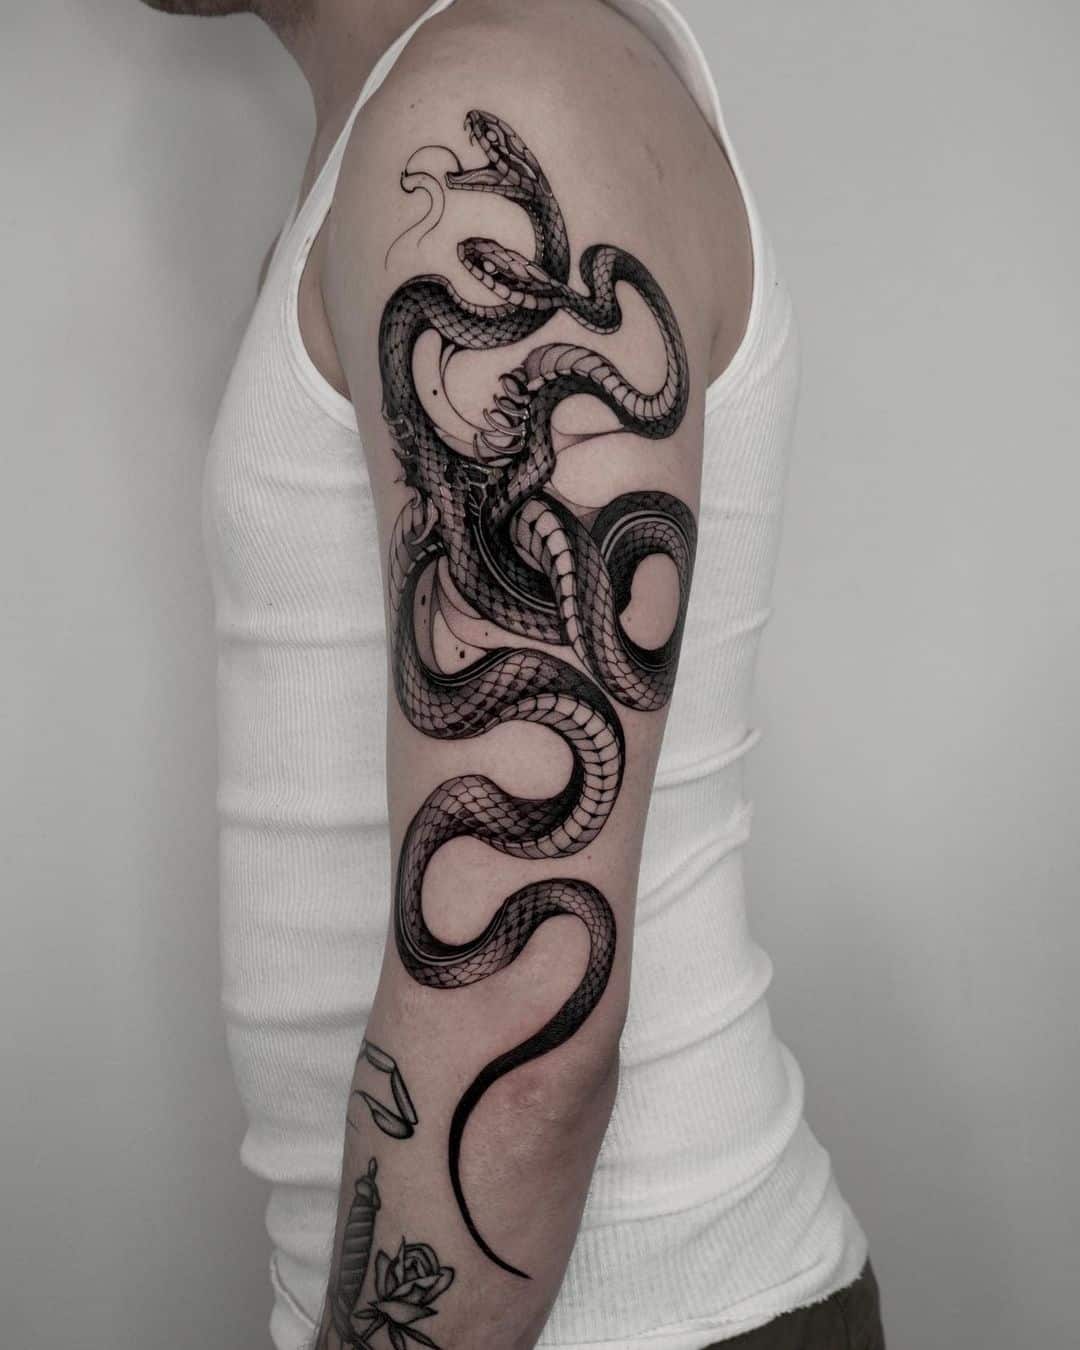 Snake tattoo by gush.like .kush